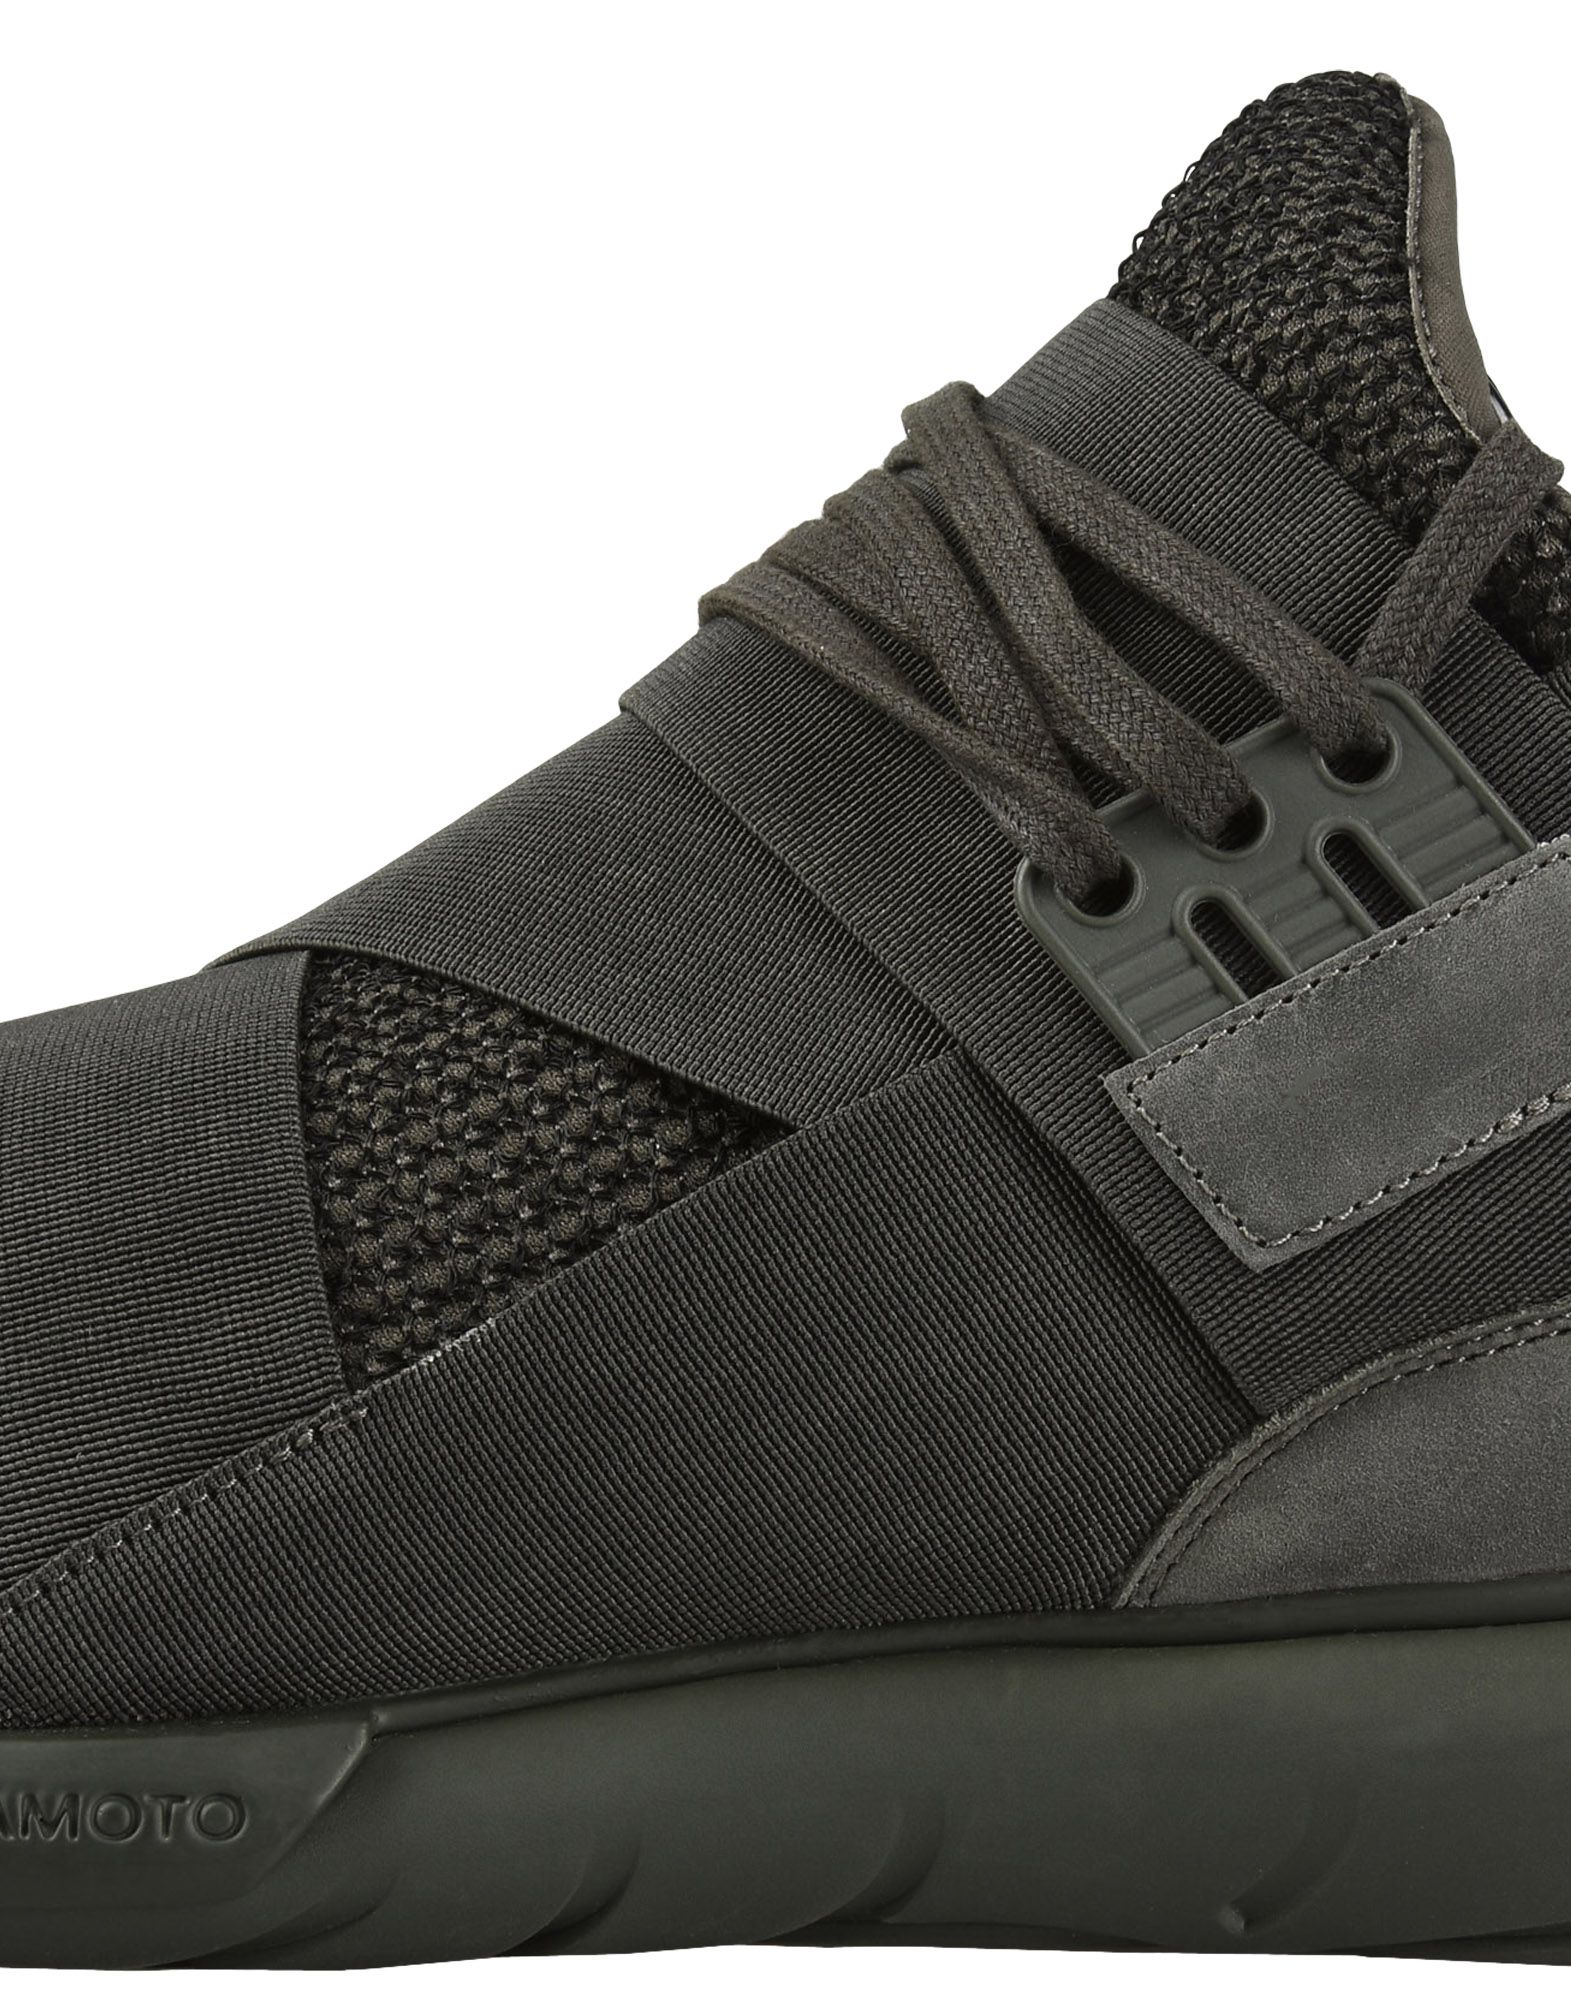 Y-3 Qasa High Sneakers in Dark Green for Men | Adidas Y-3 Official Store